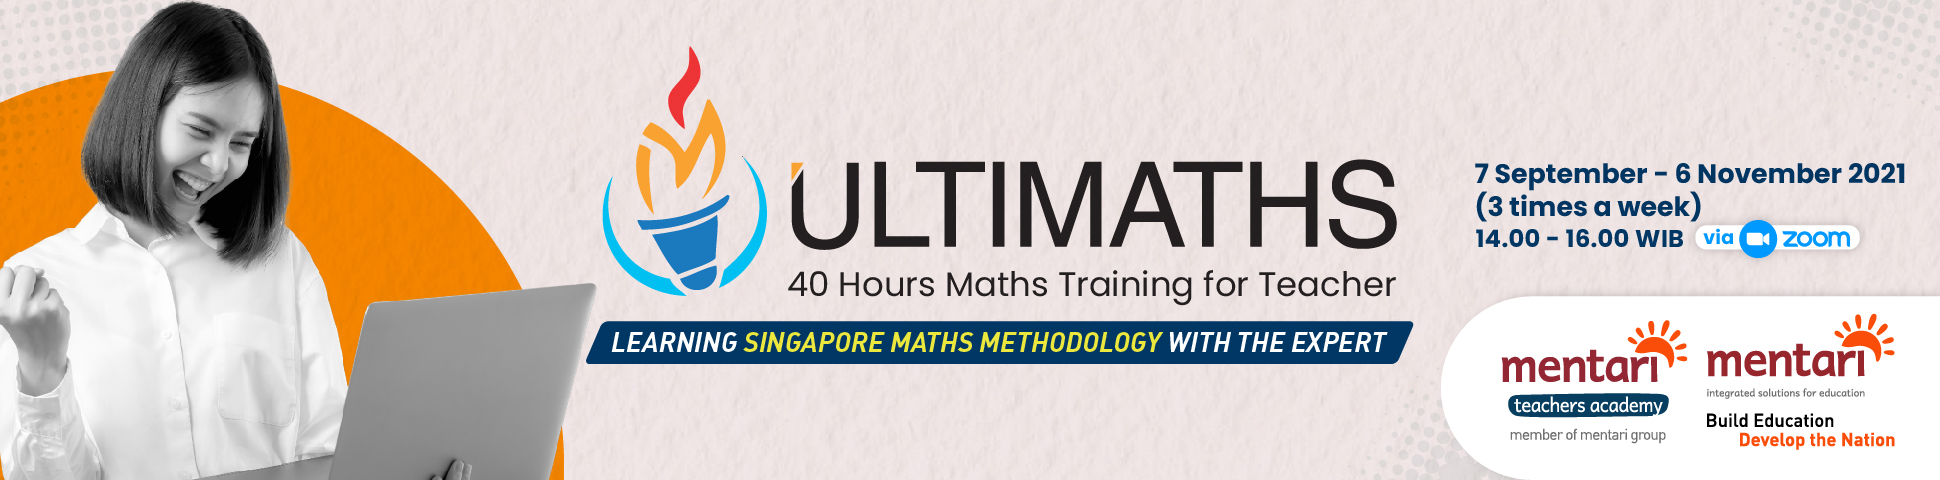 ULTIMATHS - 40 Hours Maths Training for Teacher